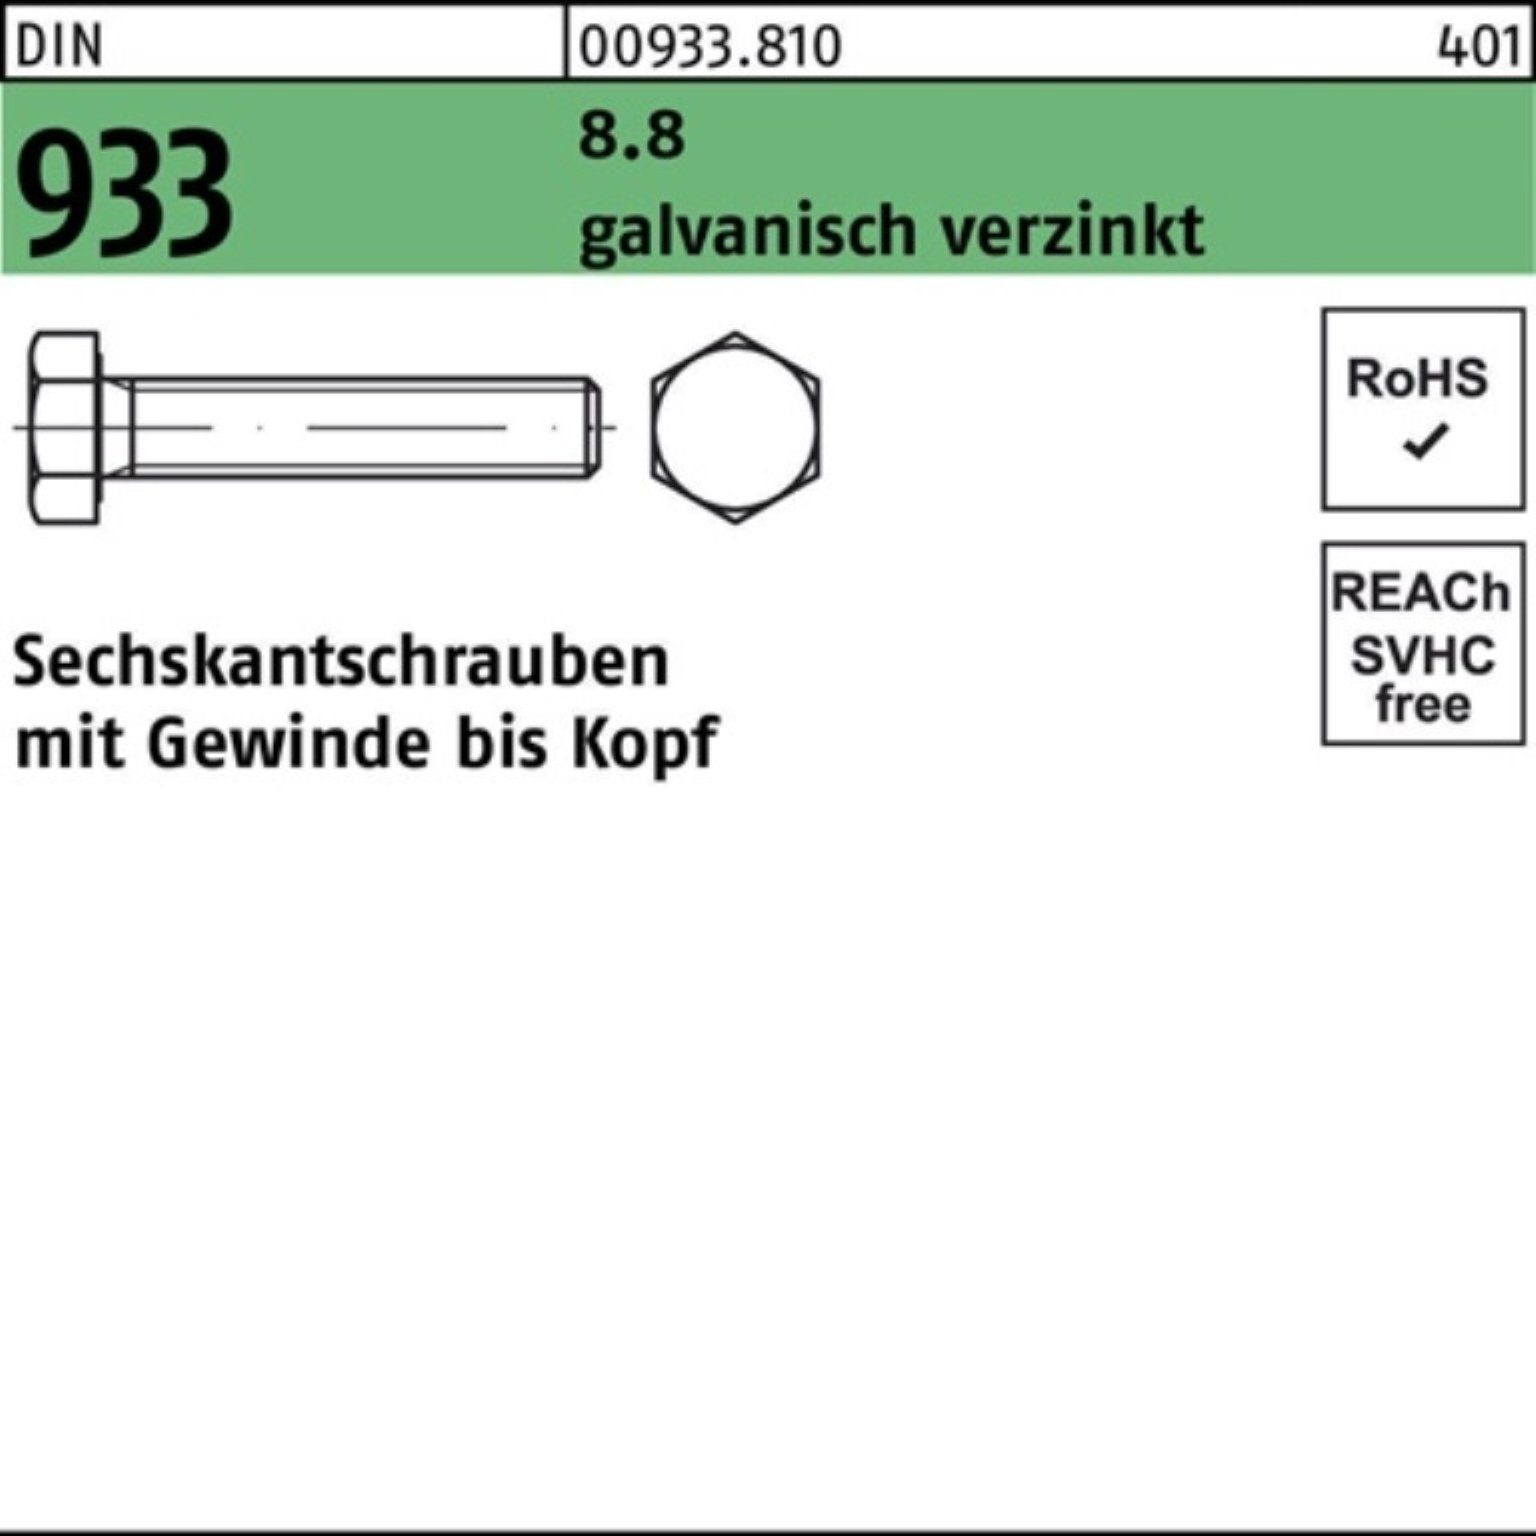 Reyher Sechskantschraube 8.8 200 Pack Sechskantschraube VG 200er Stü DIN M6x galv.verz. 933 45